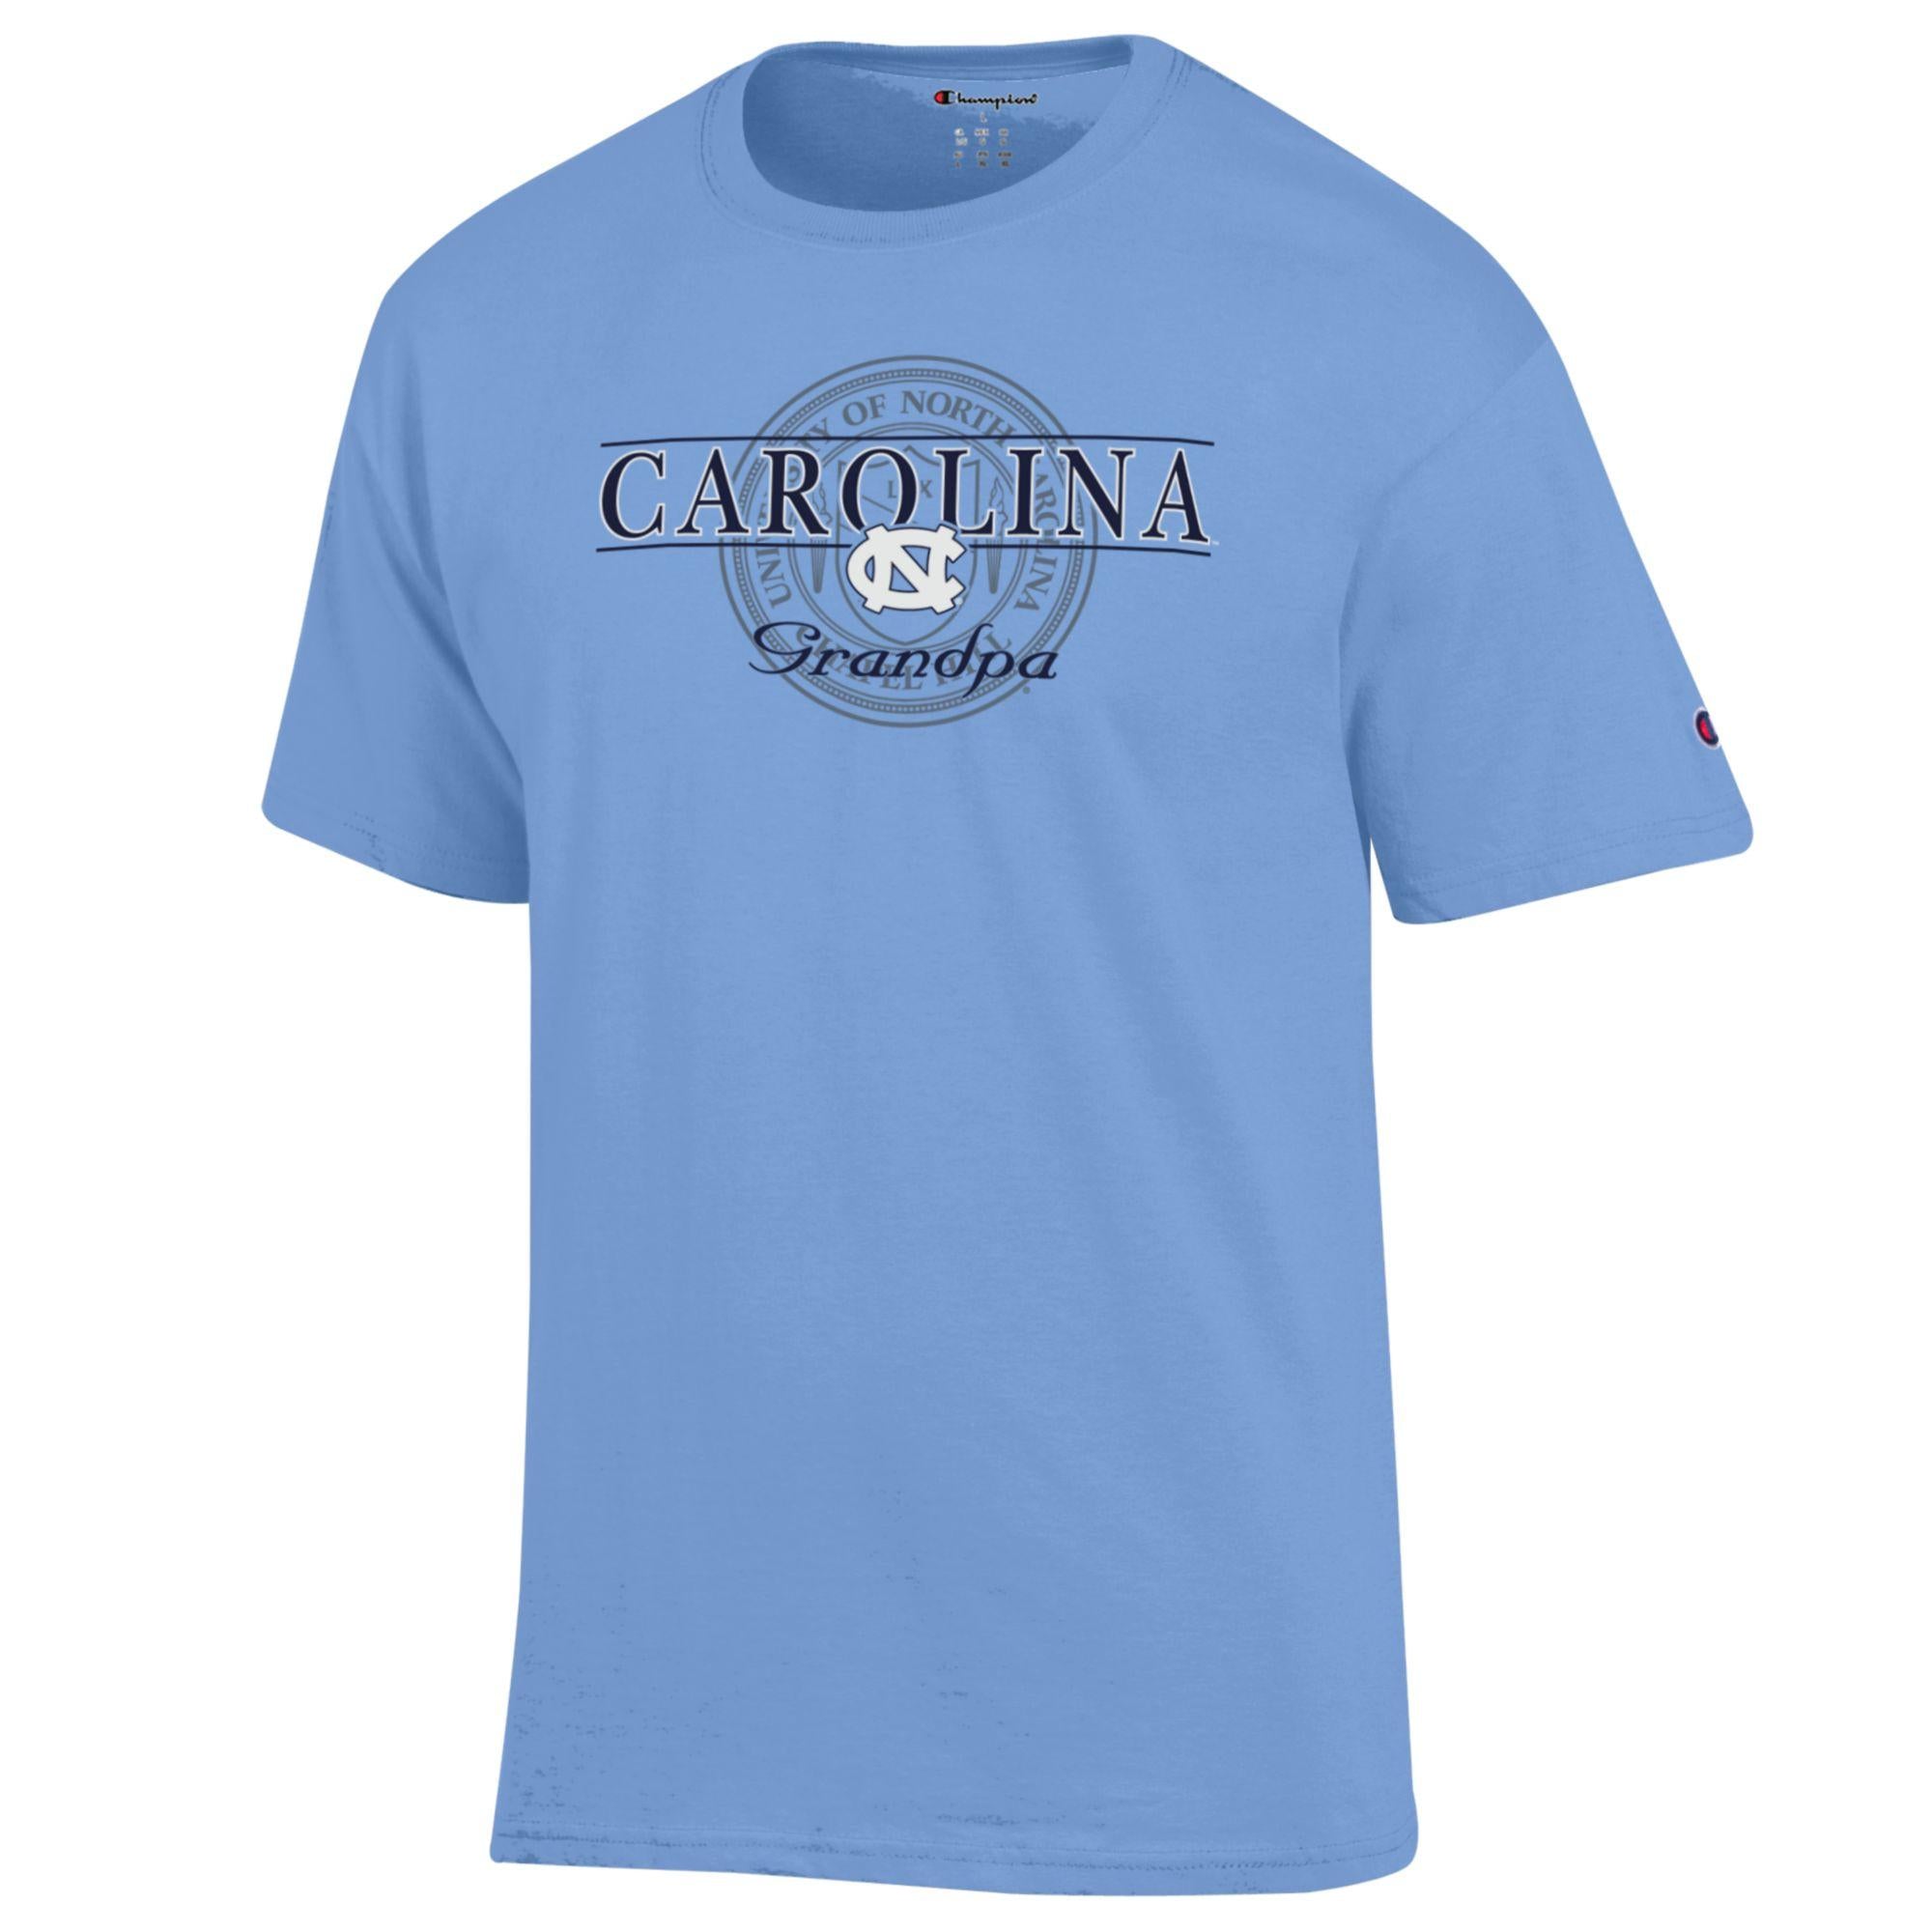 Carolina Grandpa T-Shirt